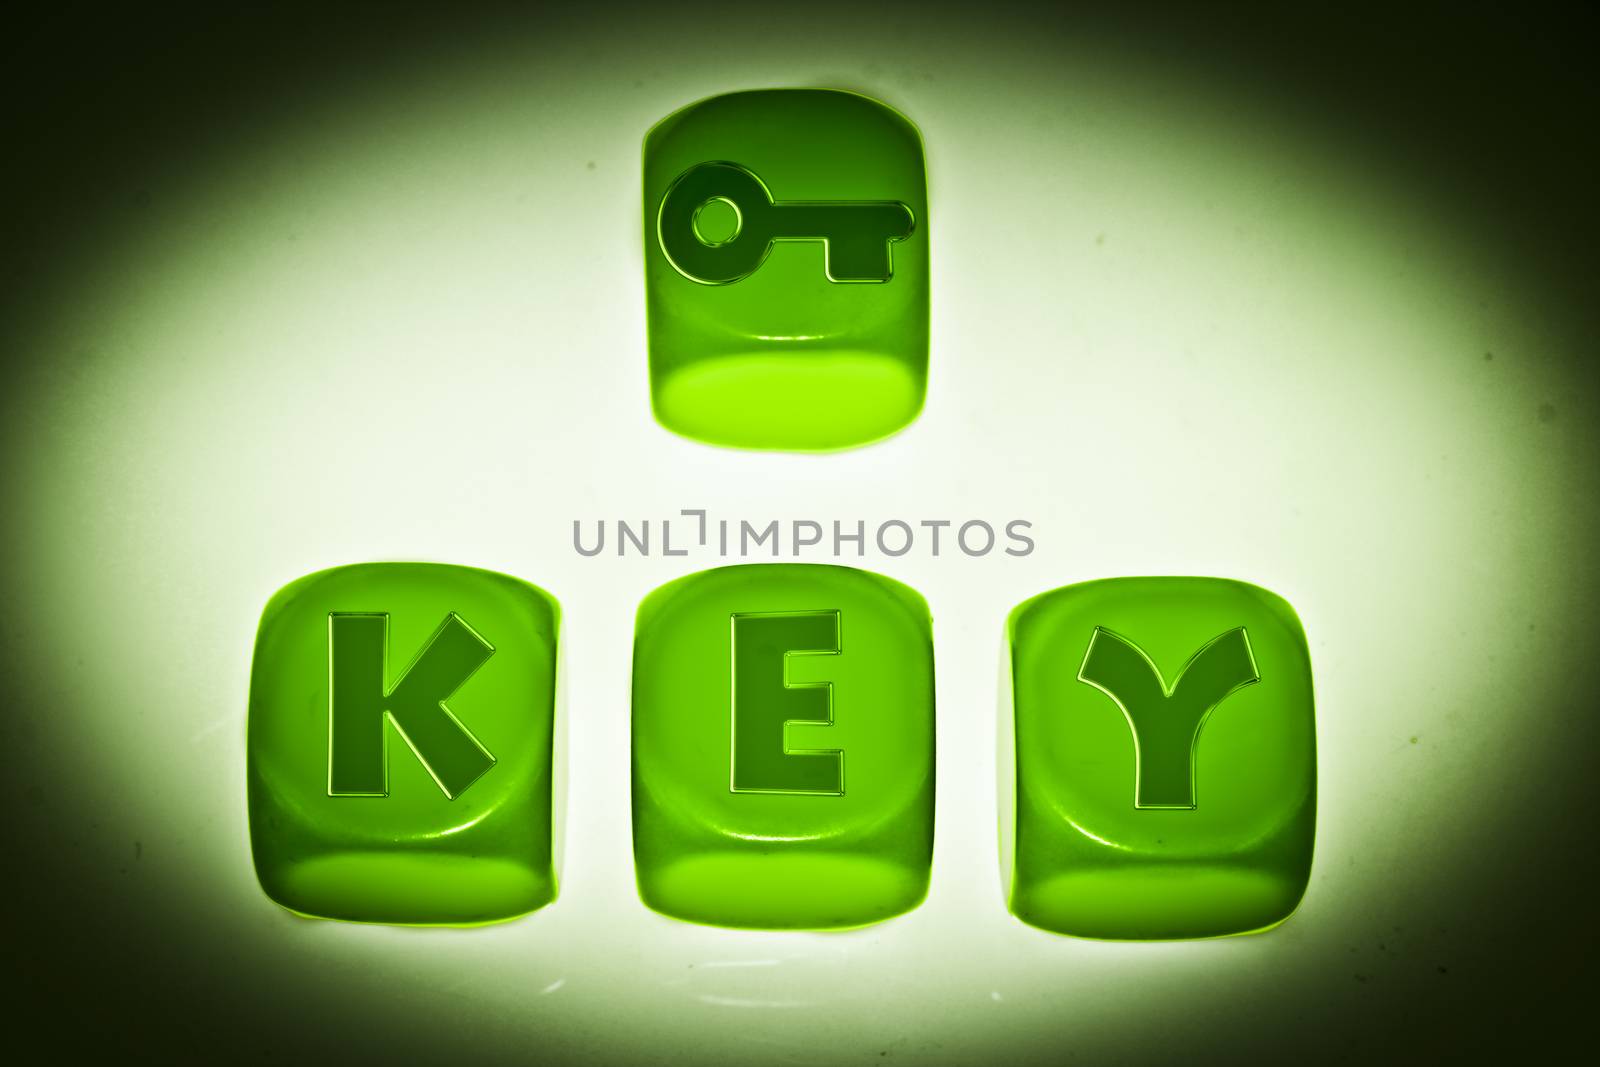 Key symbol with word KEY on cubes